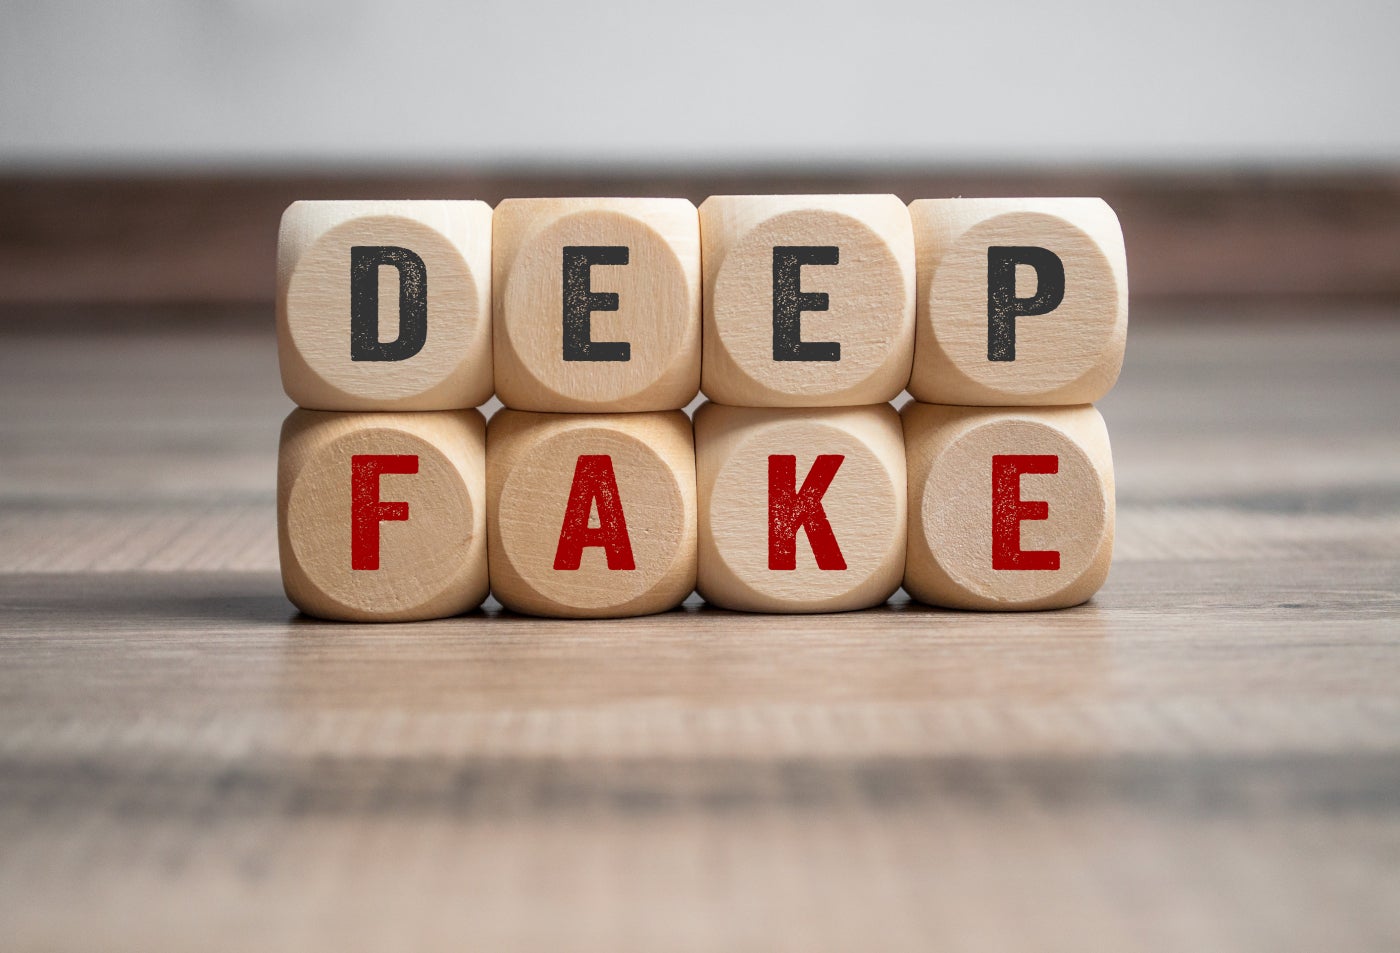 Combatting Deepfakes in Australia: Content Credentials is the Start